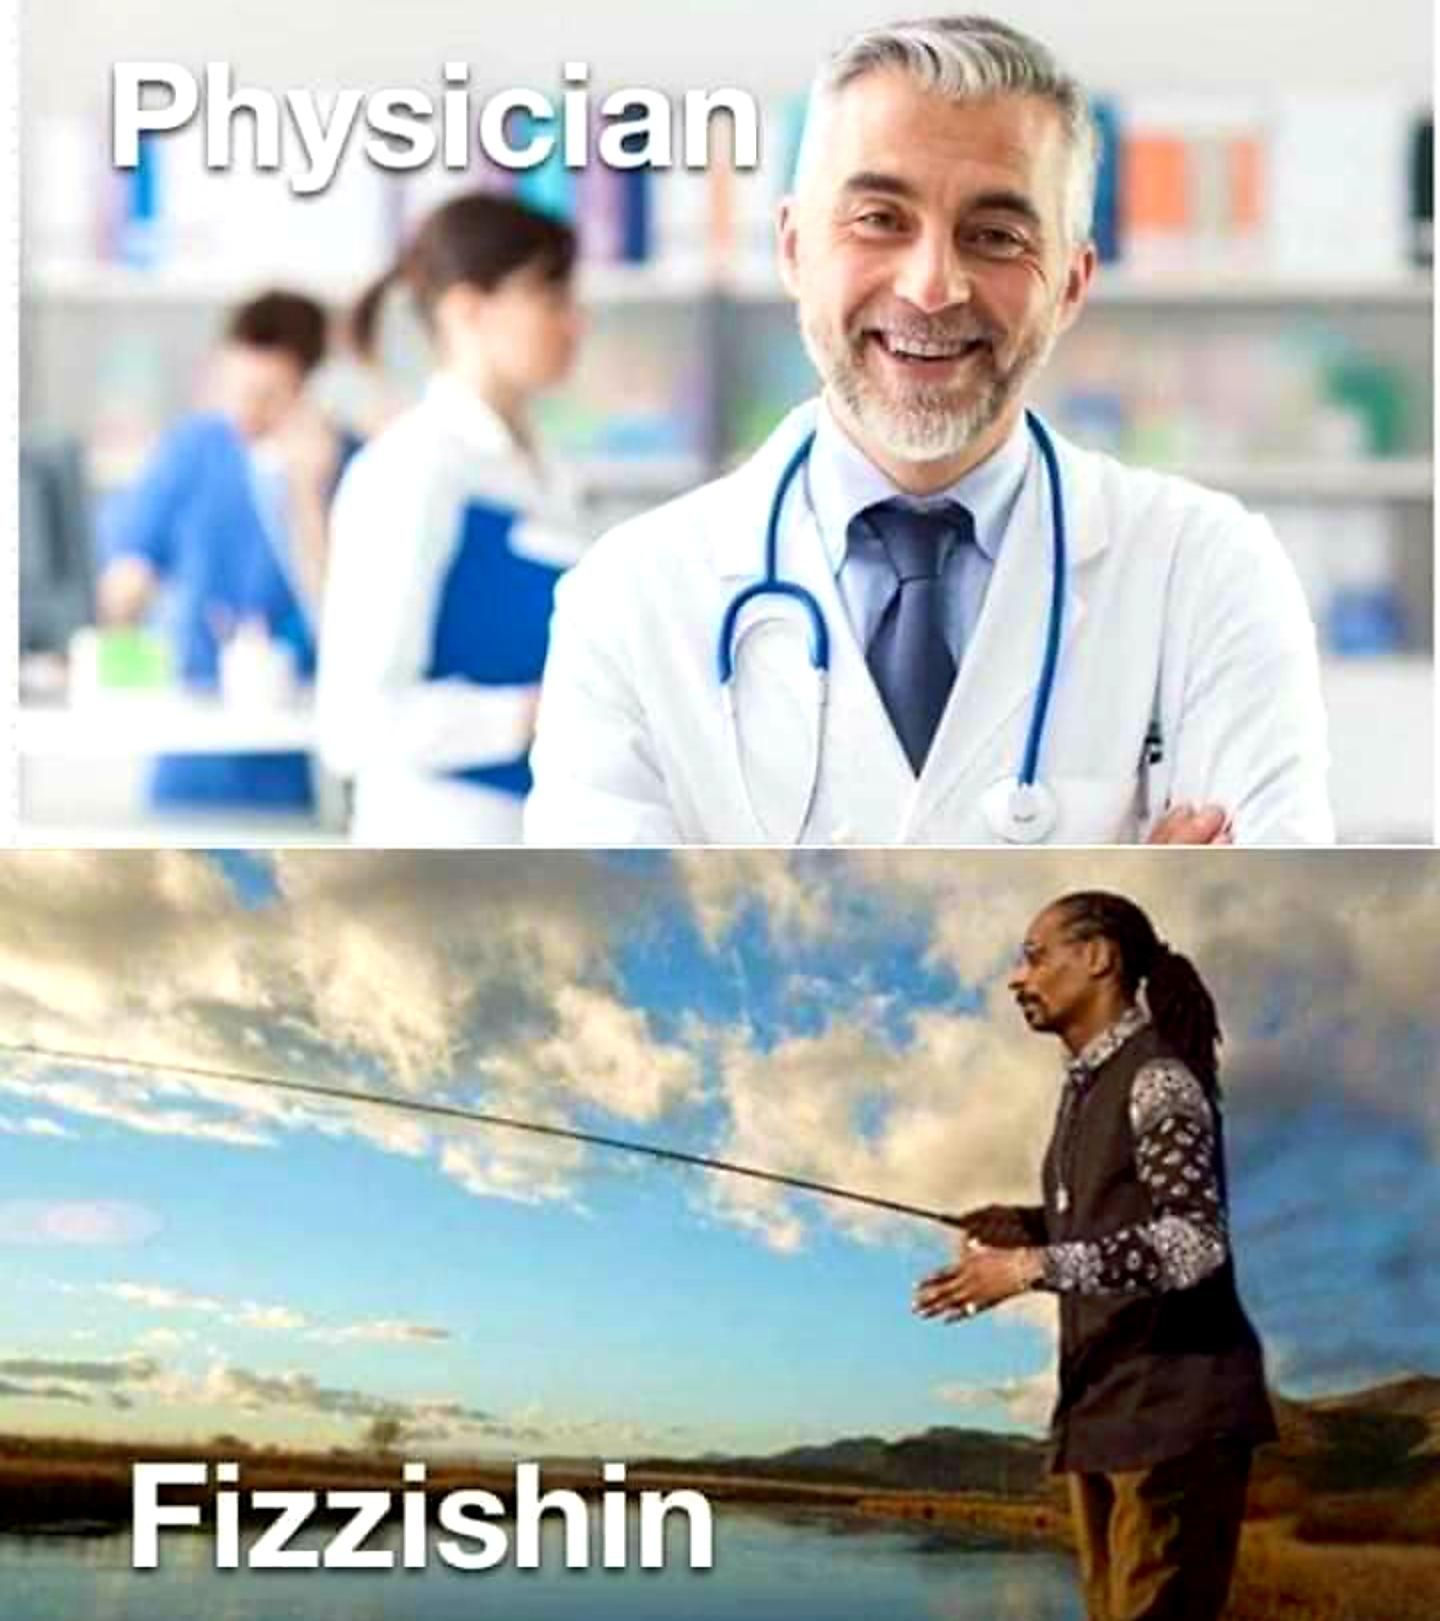 Physician versus Fizzishin